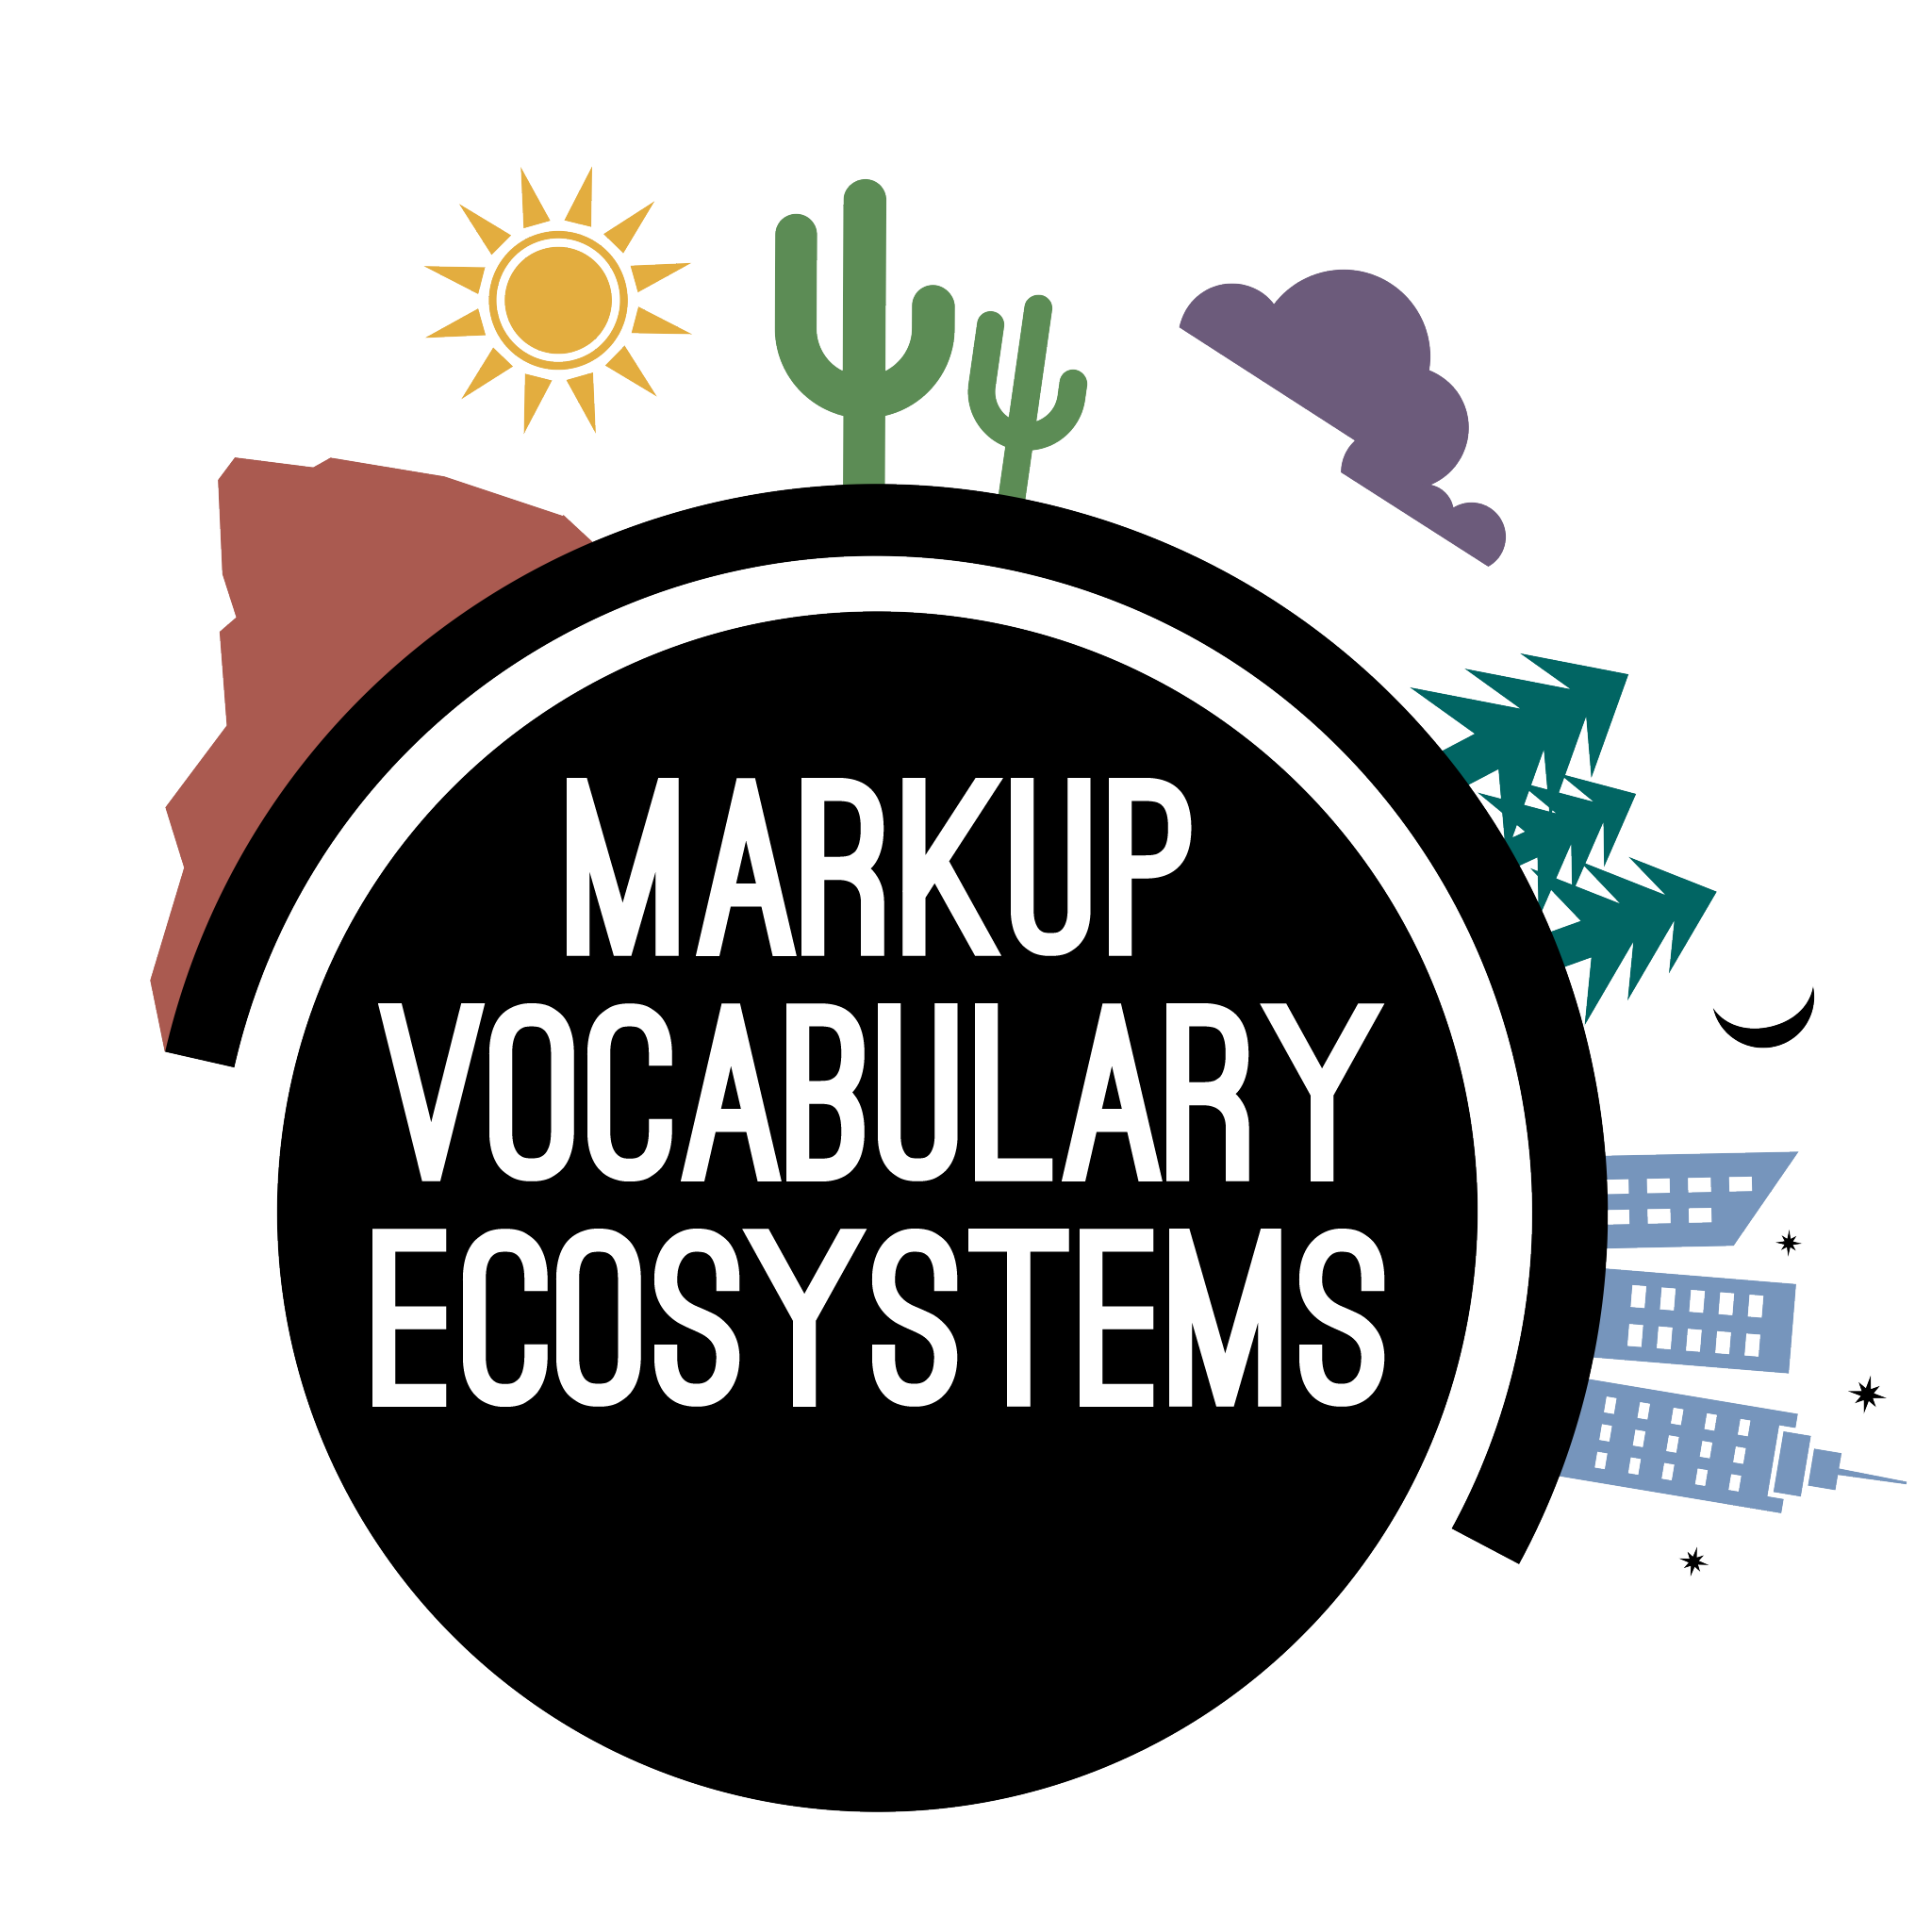 Markup Vocabulary Ecosystems symposium logo